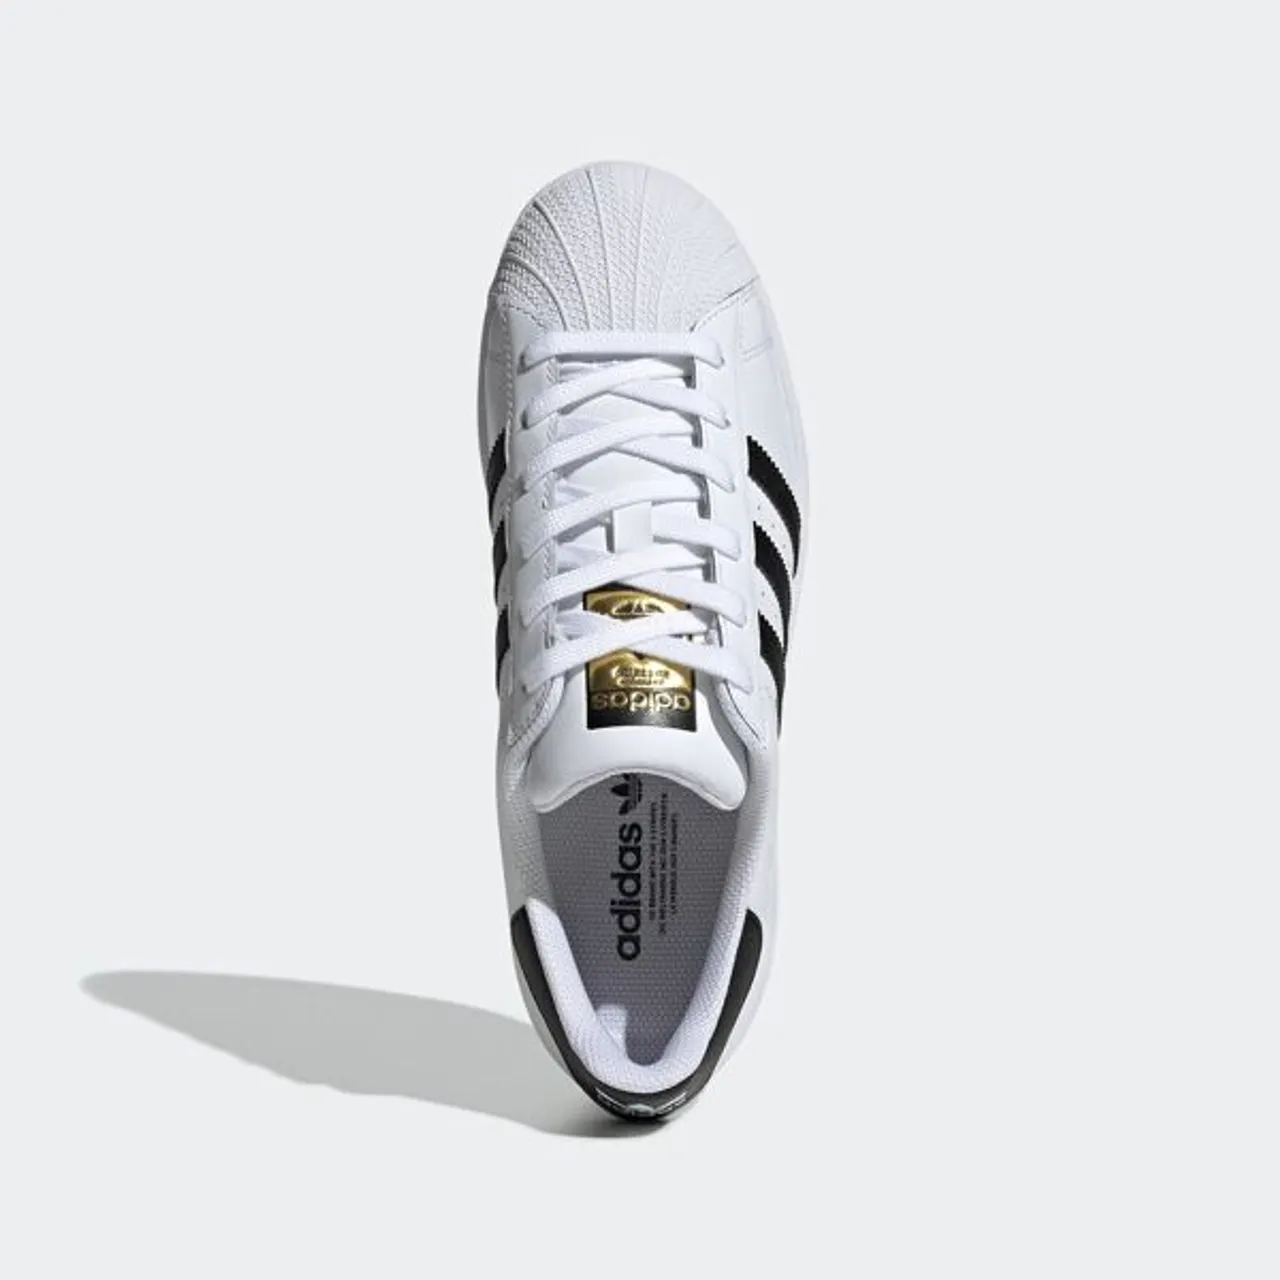 Sneaker ADIDAS ORIGINALS "SUPERSTAR" Gr. 36, schwarz-weiß (cloud white, core black, cloud white) Schuhe Sneaker